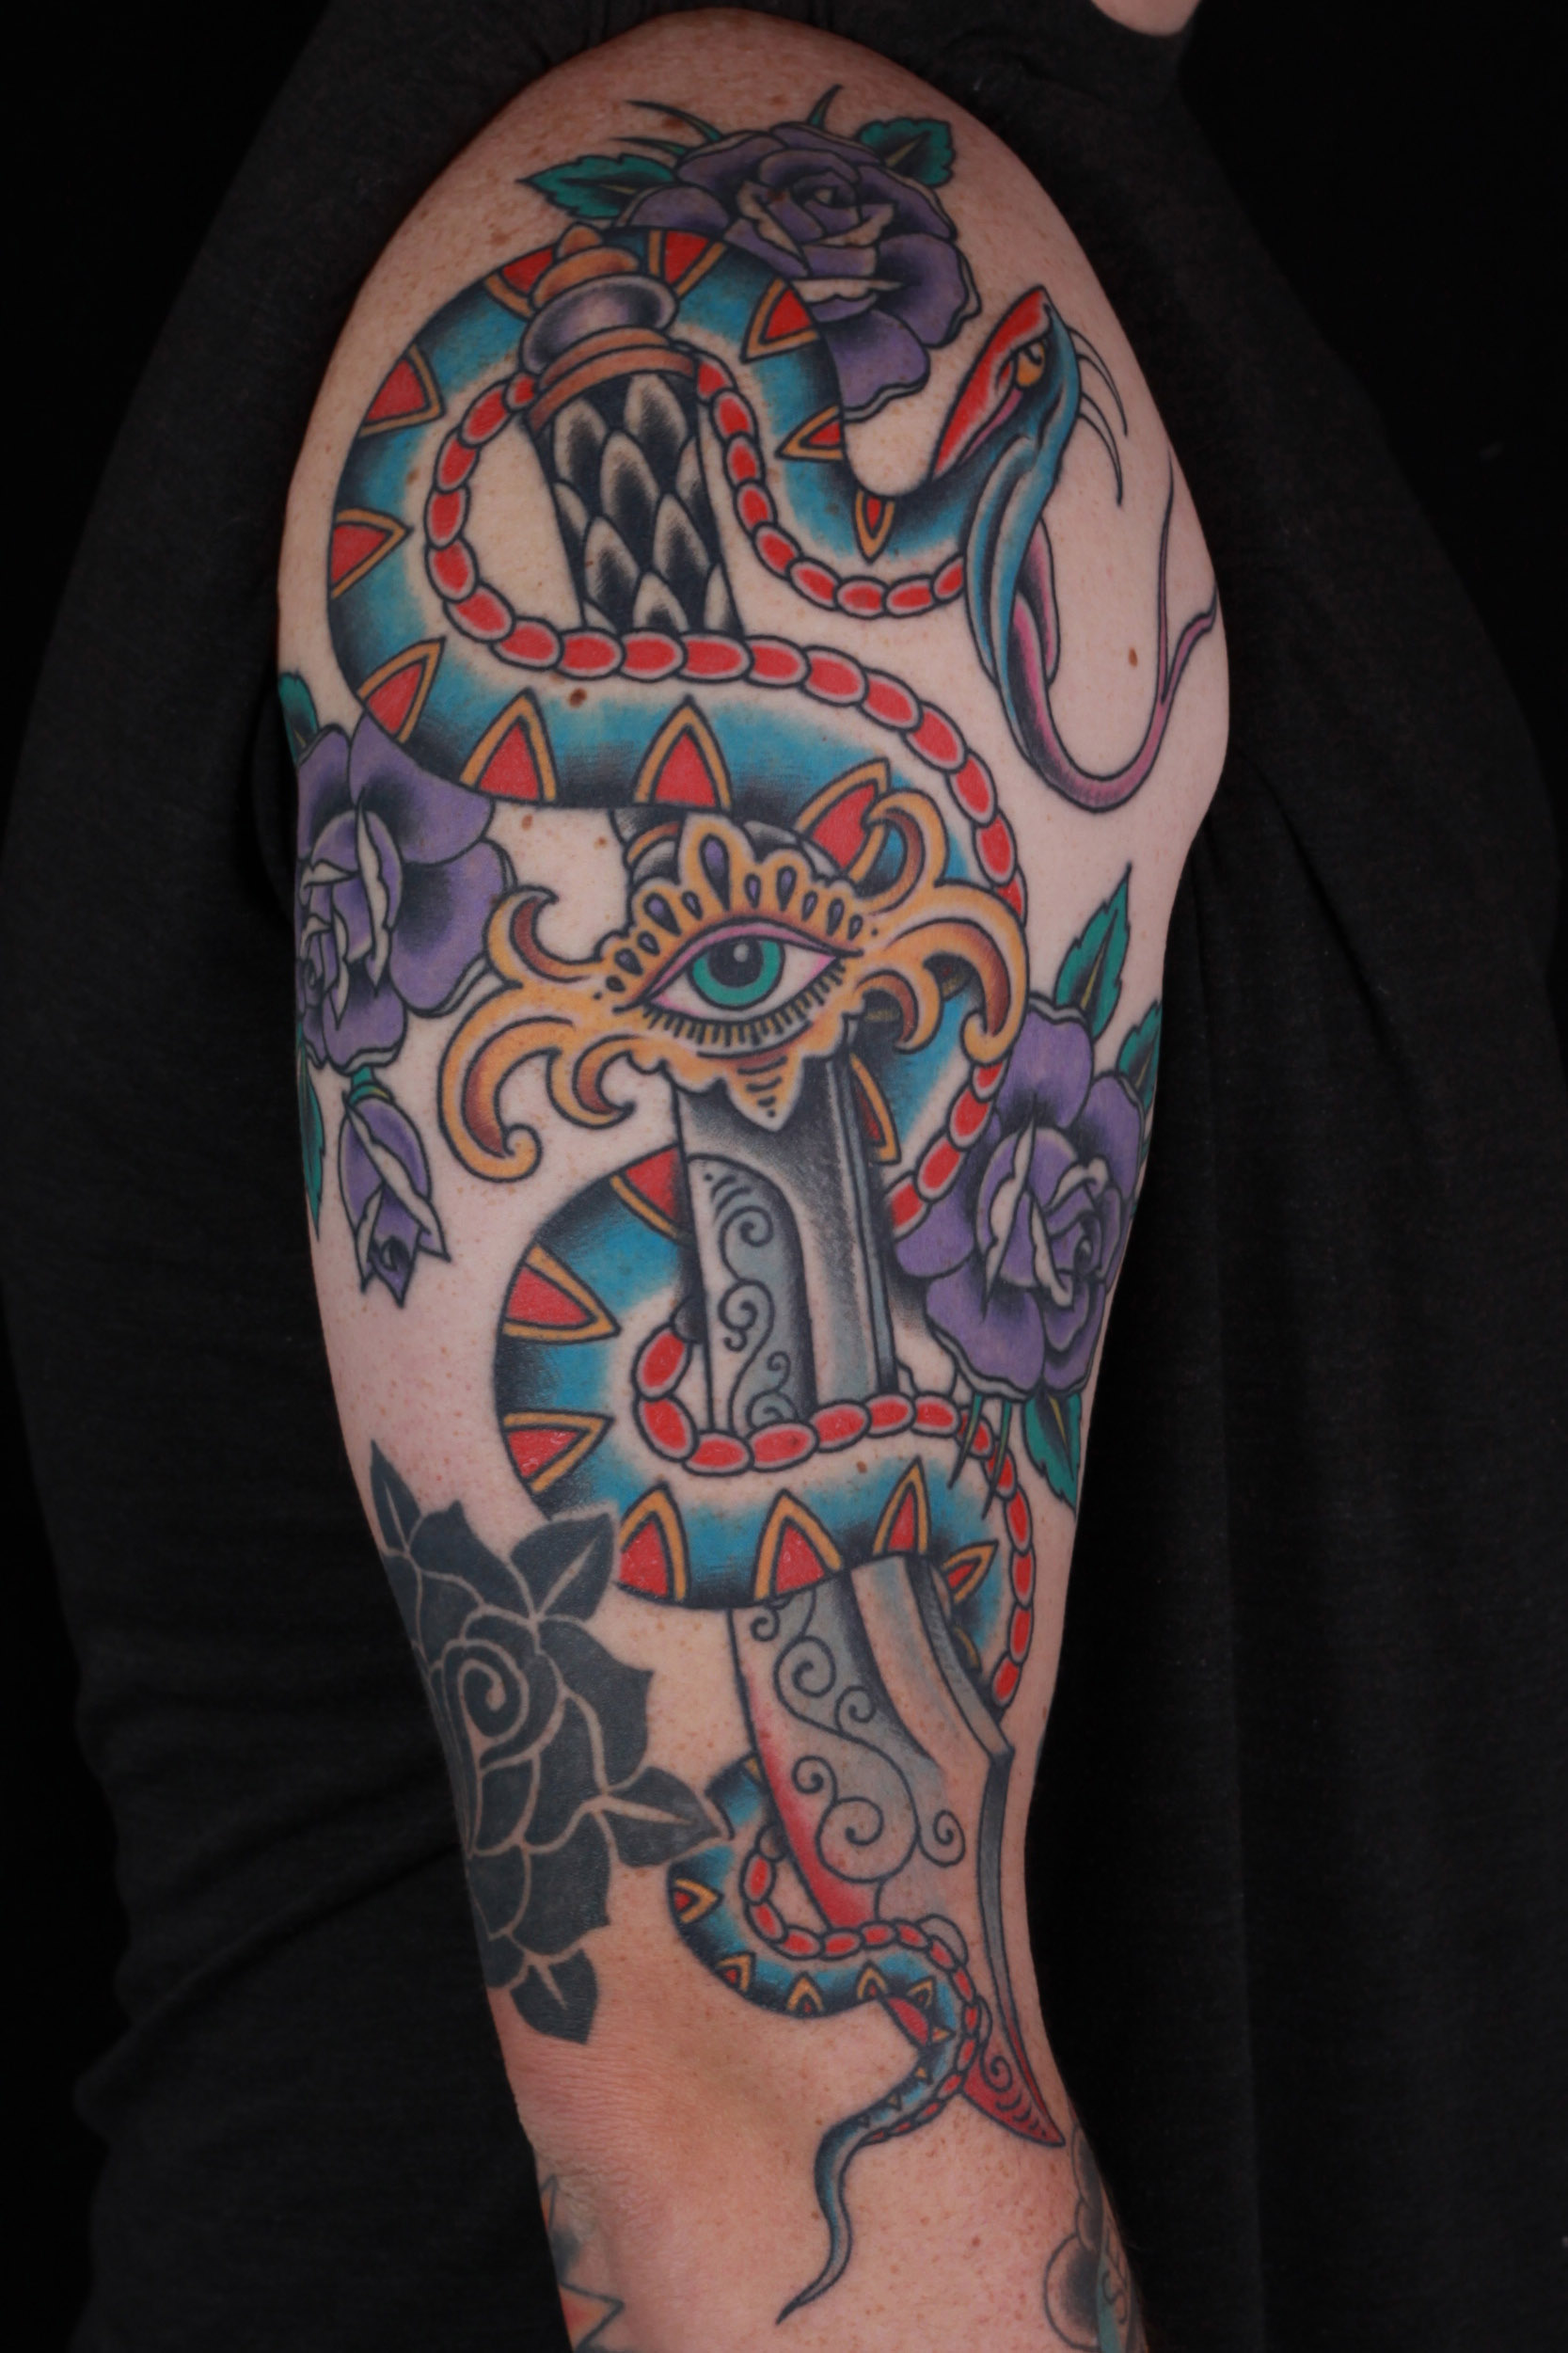 brian-thurow-dedication-tattoo-traditional-arm-snake-dagger-roses